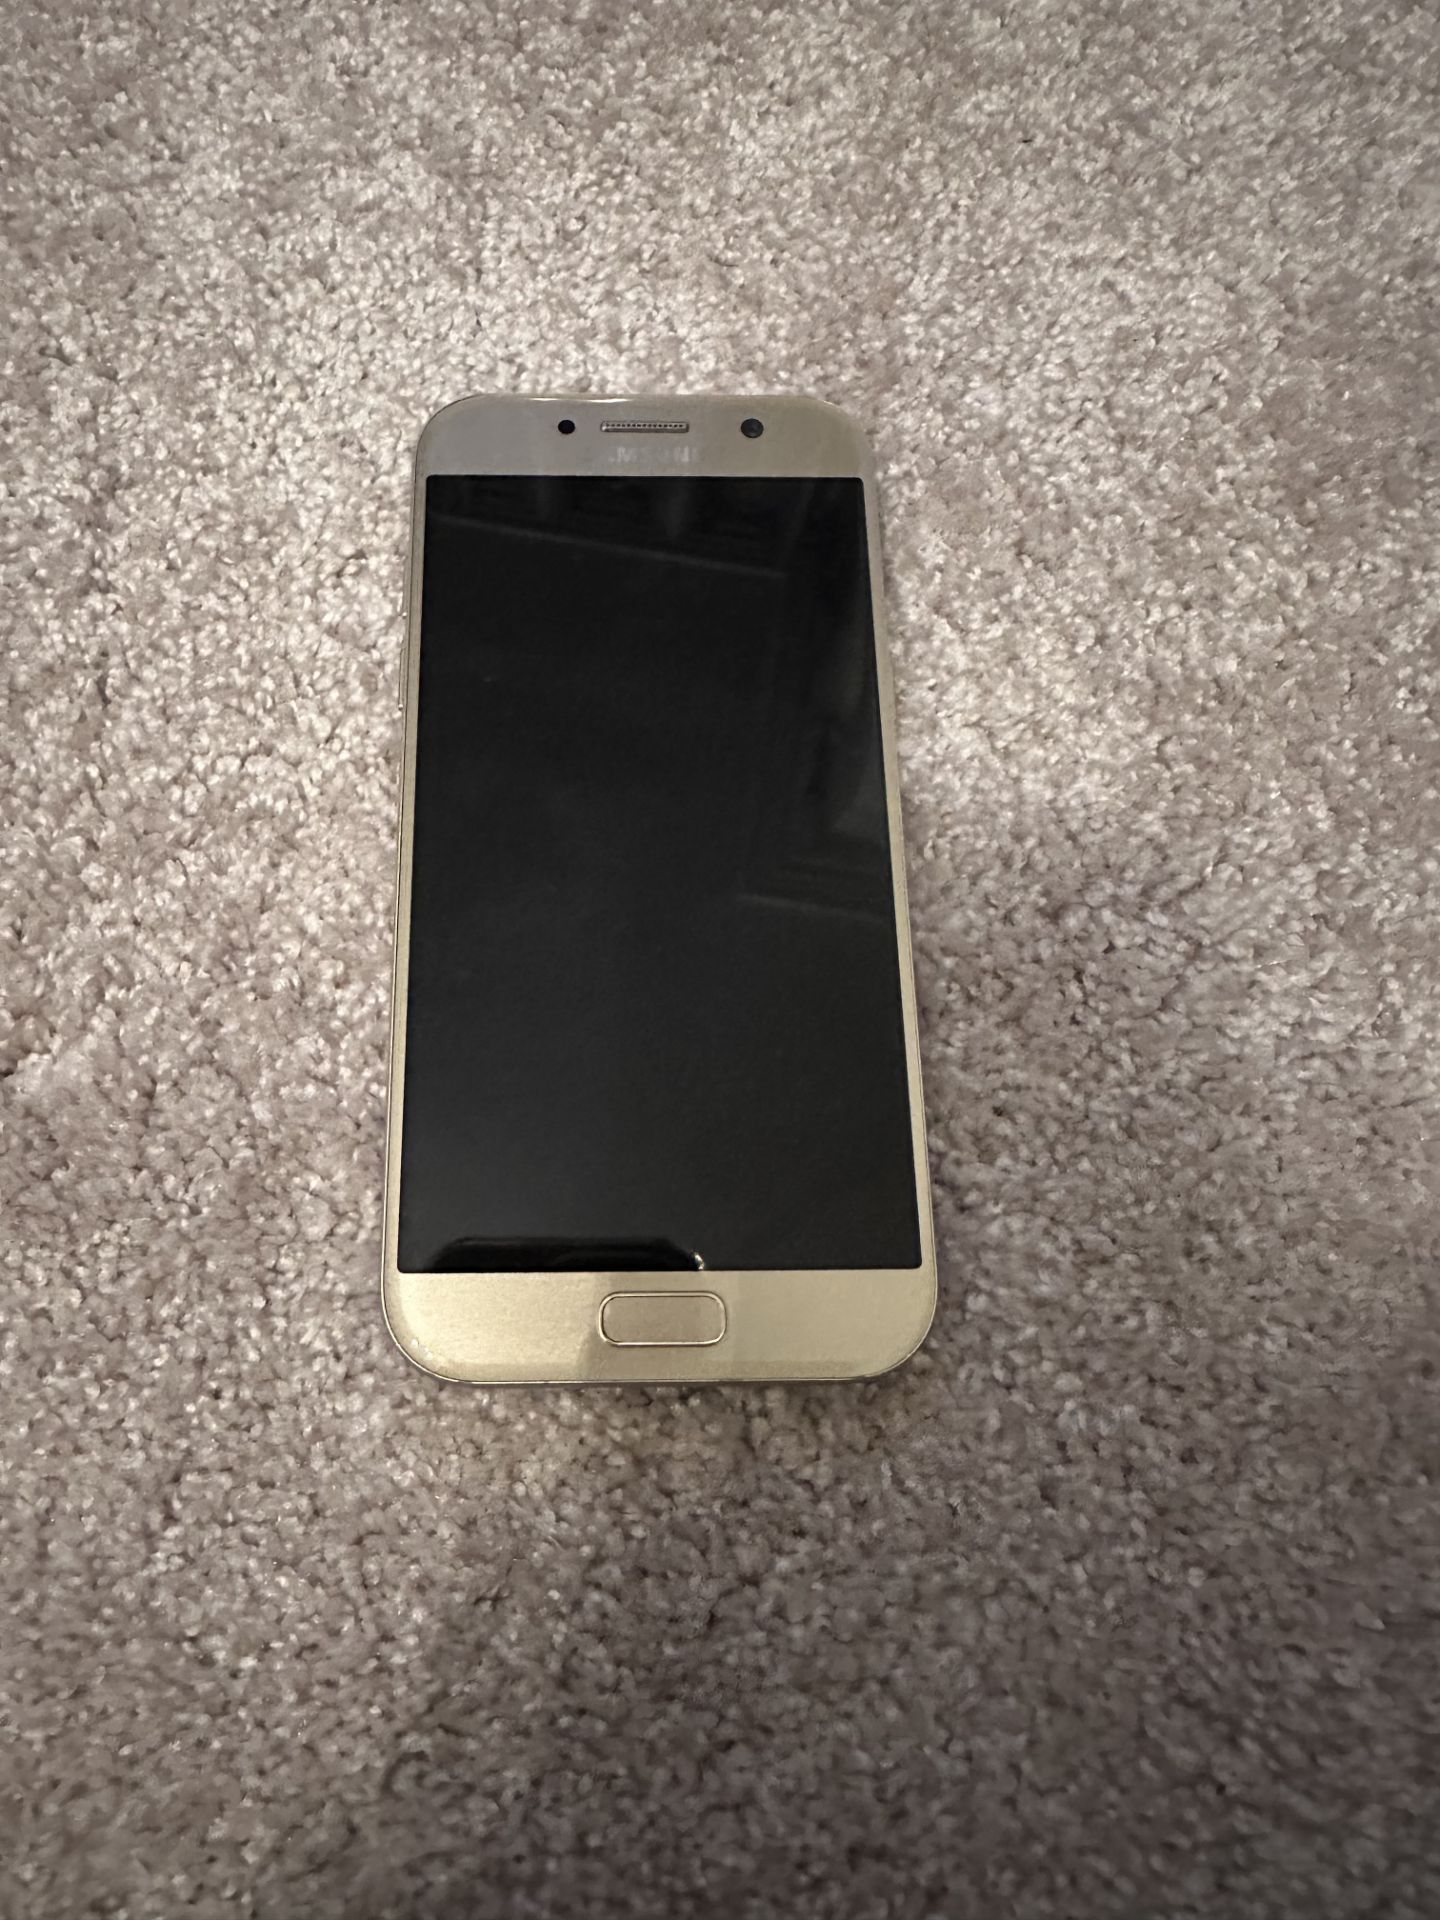 Samsung A5 Gold - No VAT - Untested